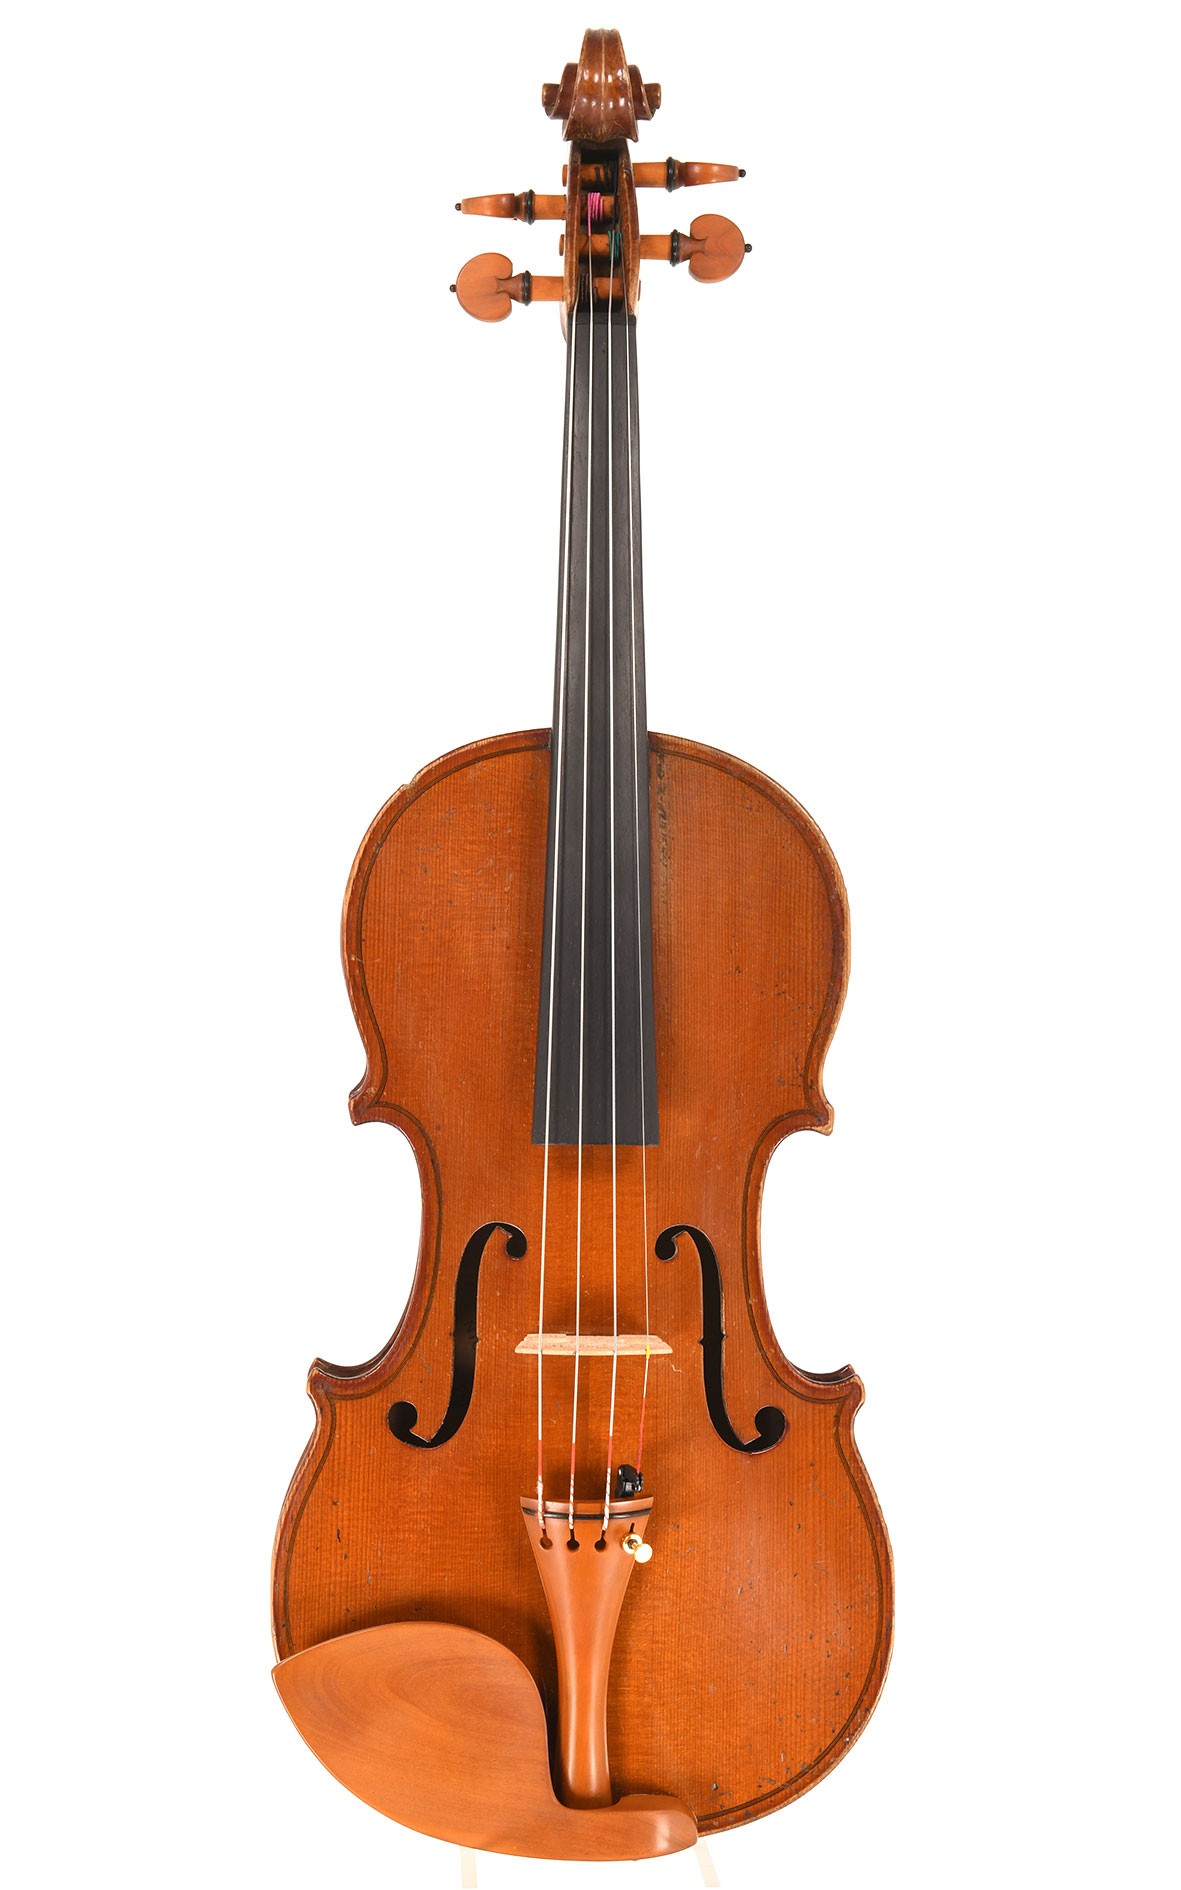 法国小提琴品牌 "Nicolas Bertholini"